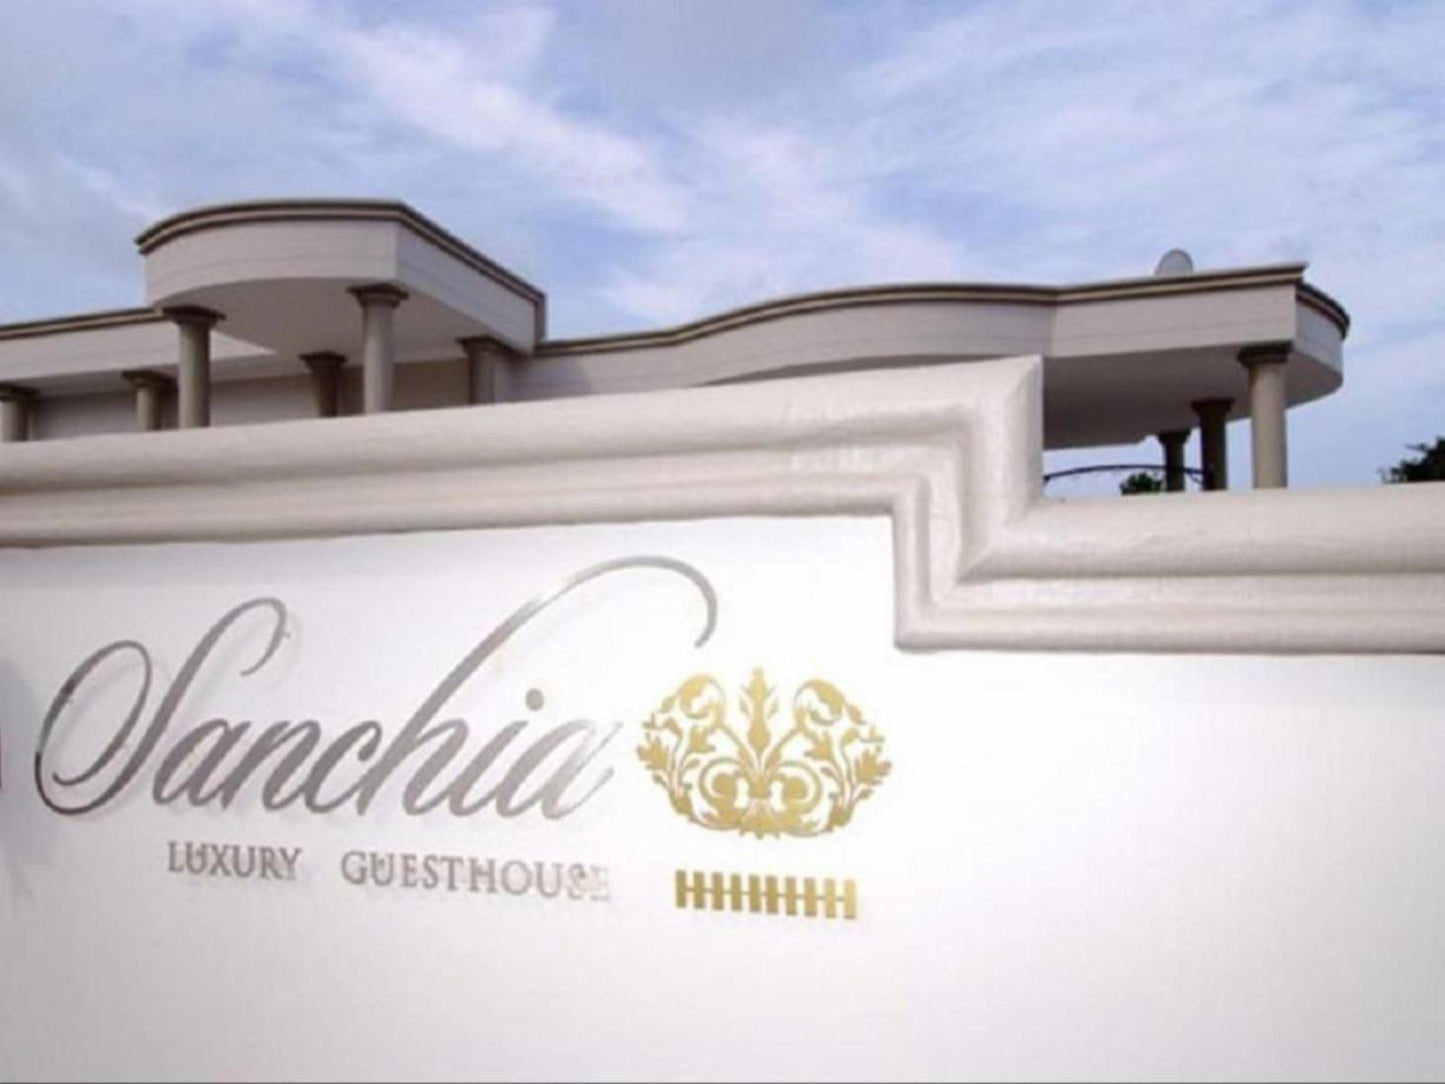 Sanchia Luxury Guesthouse Glenashley Durban Kwazulu Natal South Africa Text, Window, Architecture